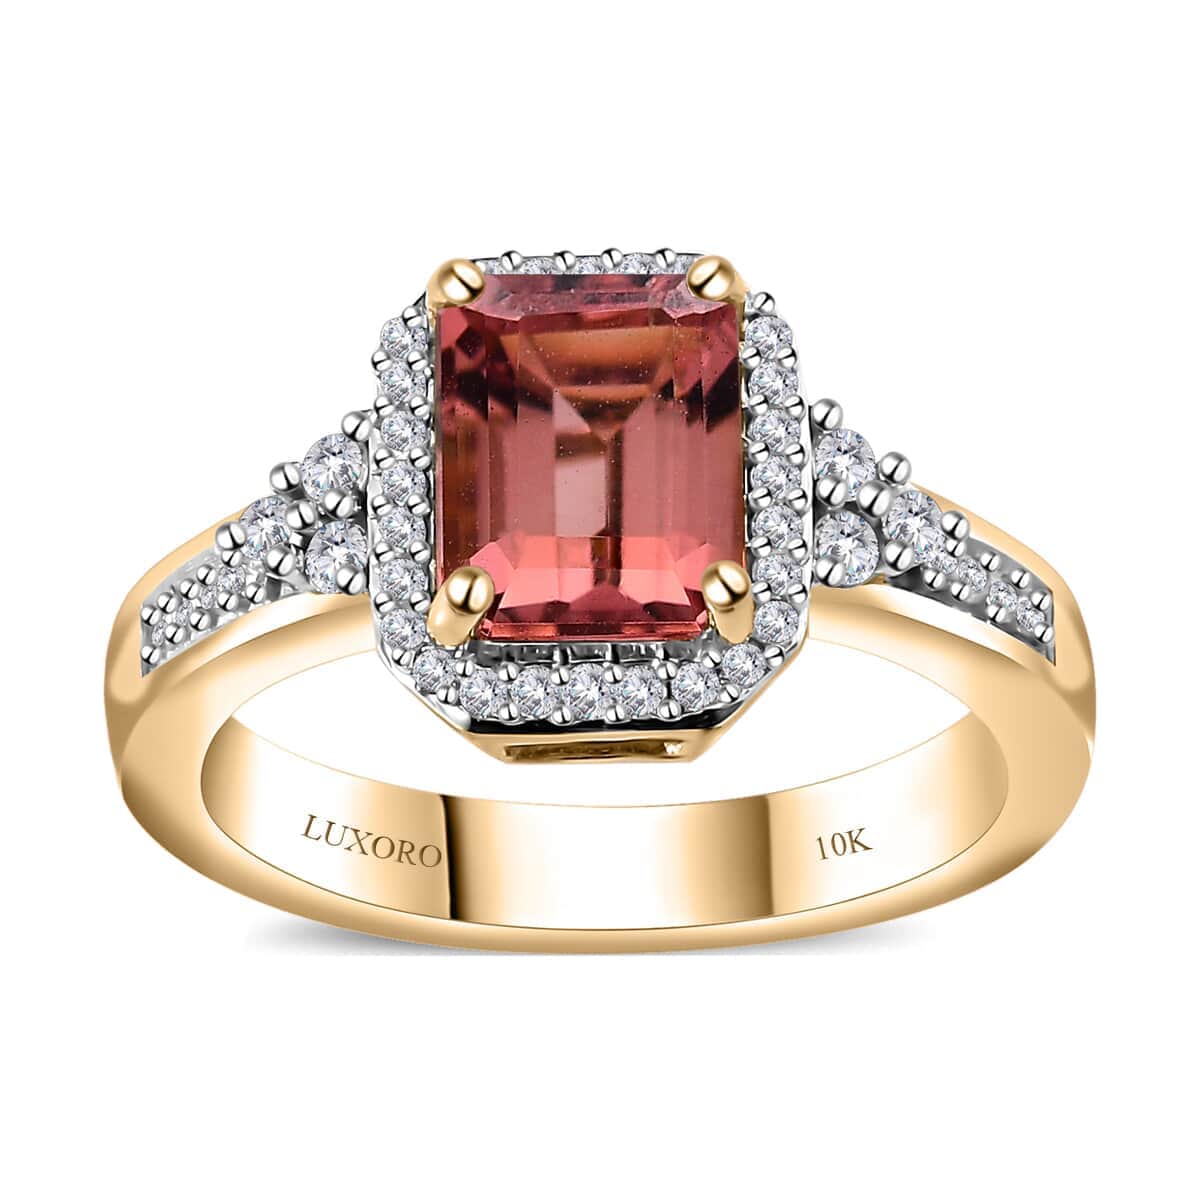 Luxoro 10K Rose Gold Premium Blush Tourmaline and G-H I2 Diamond Halo Ring (Size 6.5) 4.75 Grams 2.10 ctw image number 0